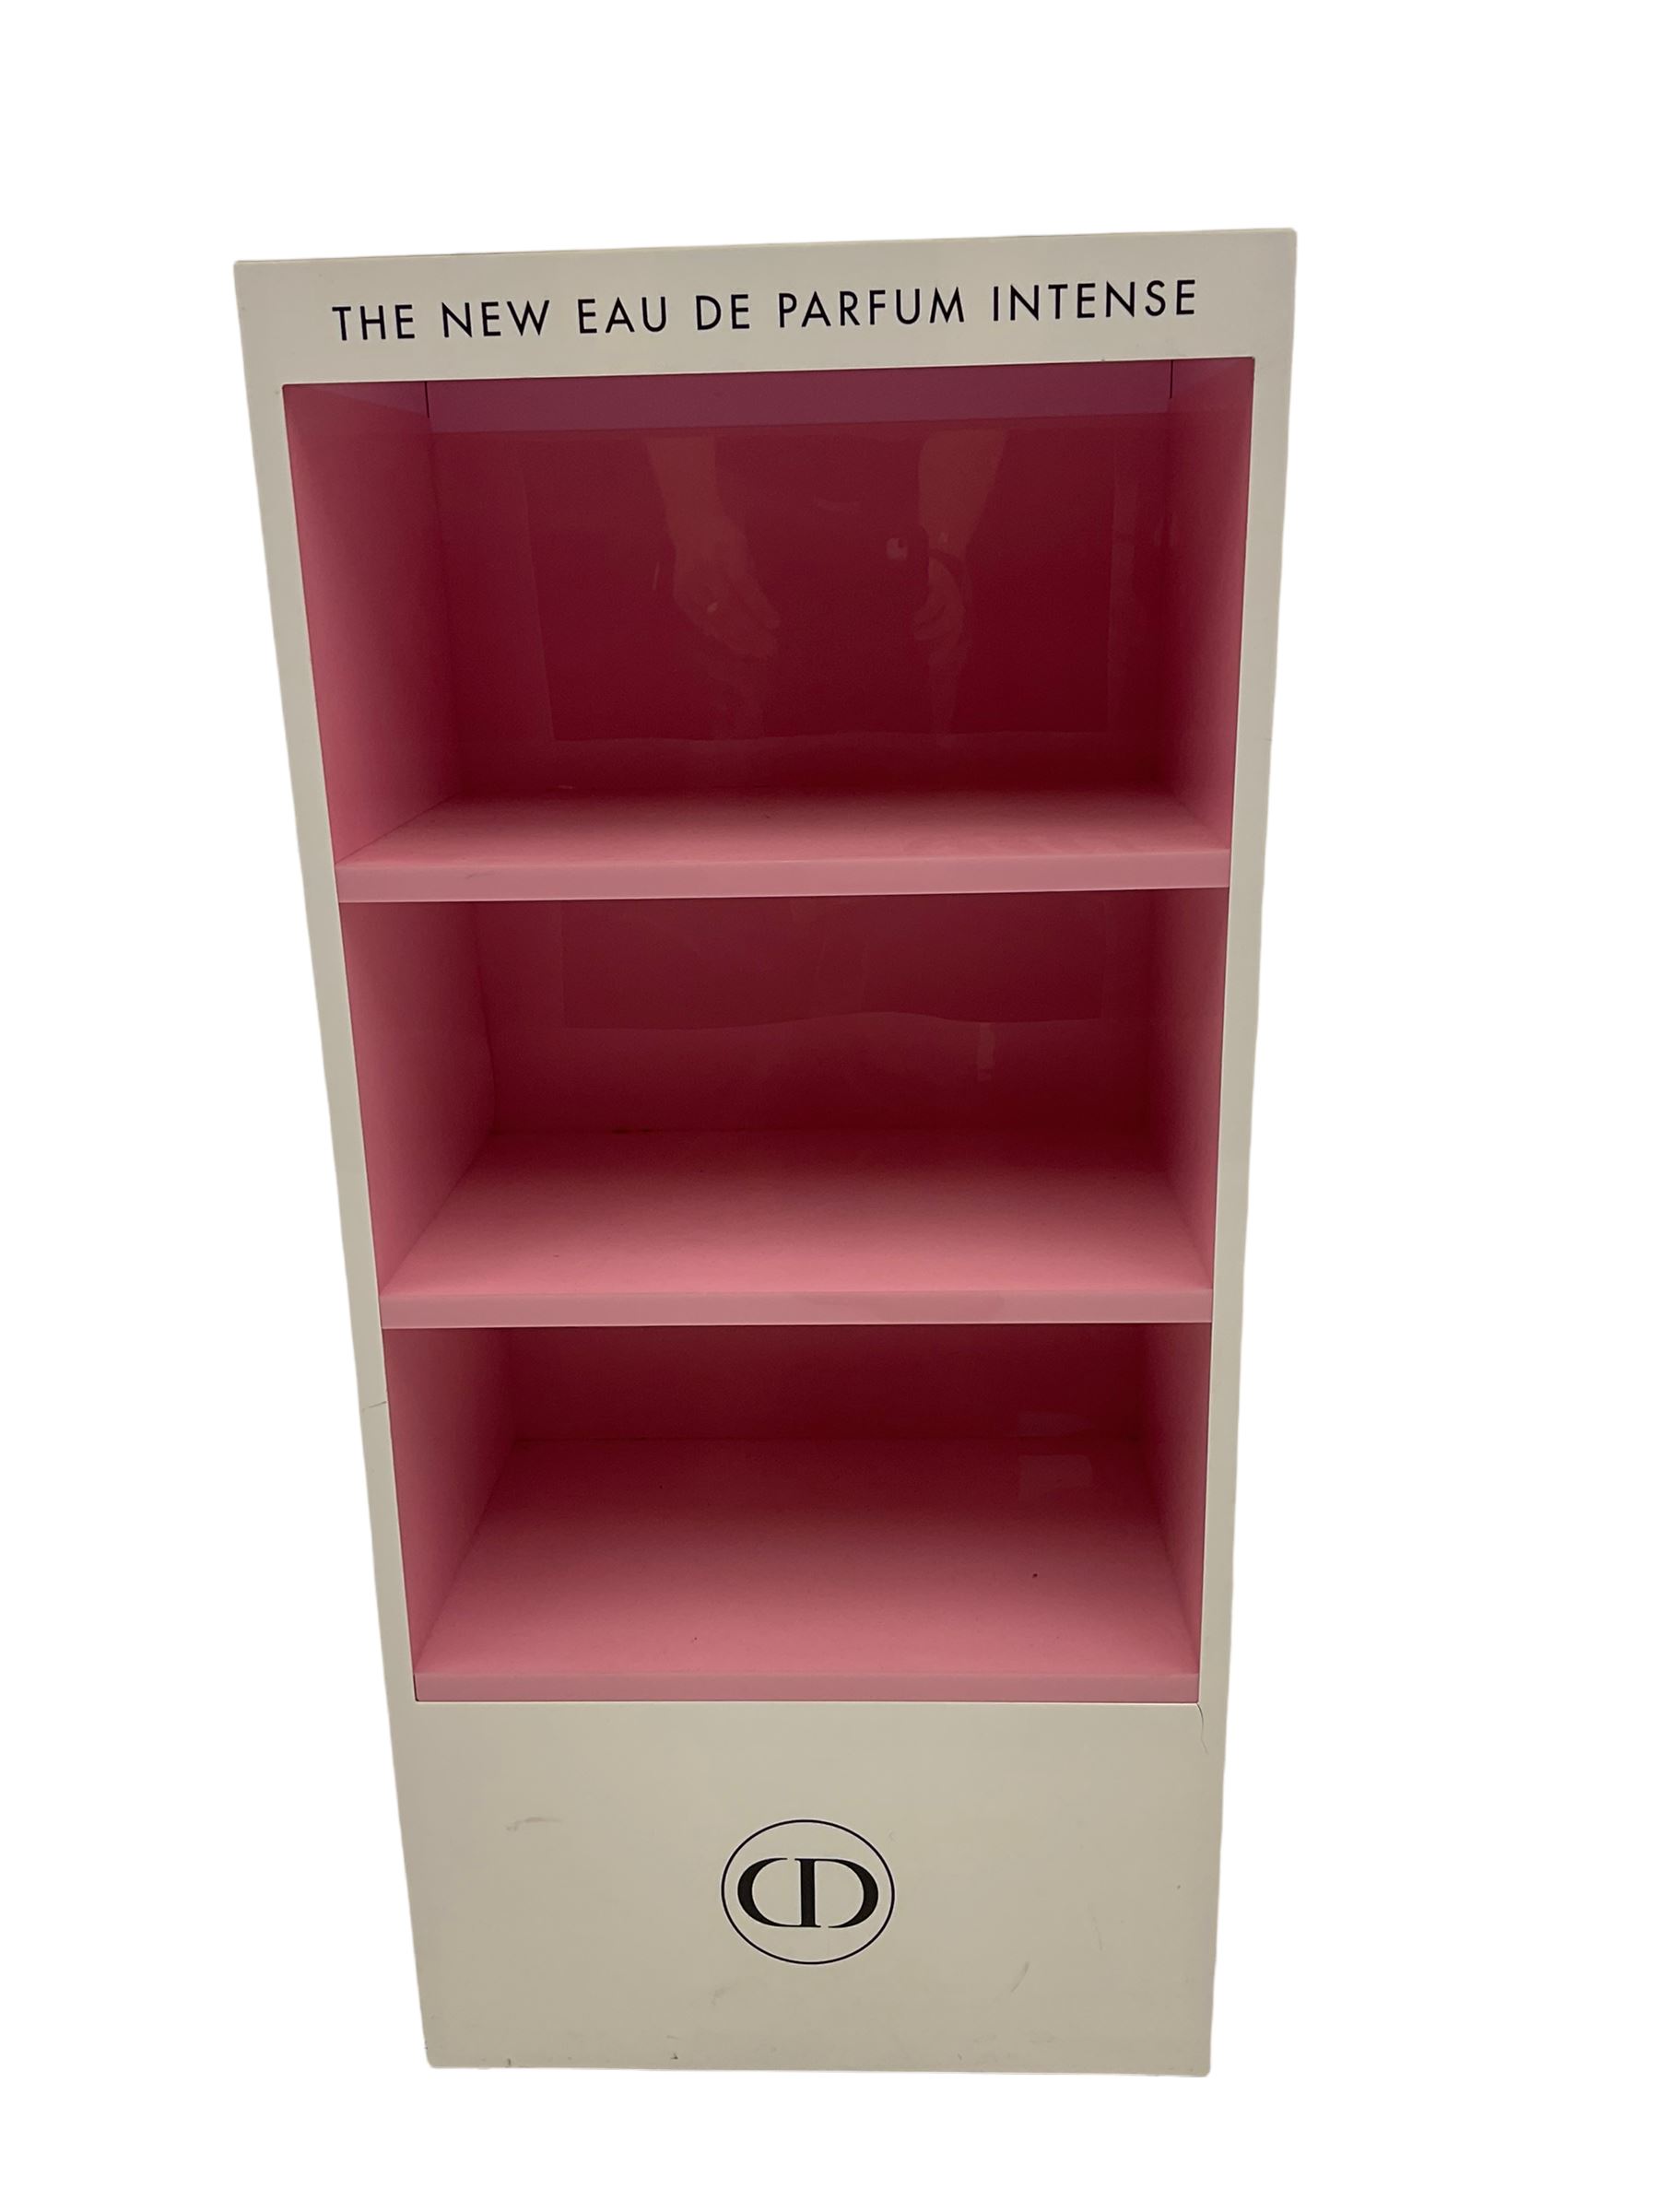 Christian Dior shop display stand - Image 4 of 6